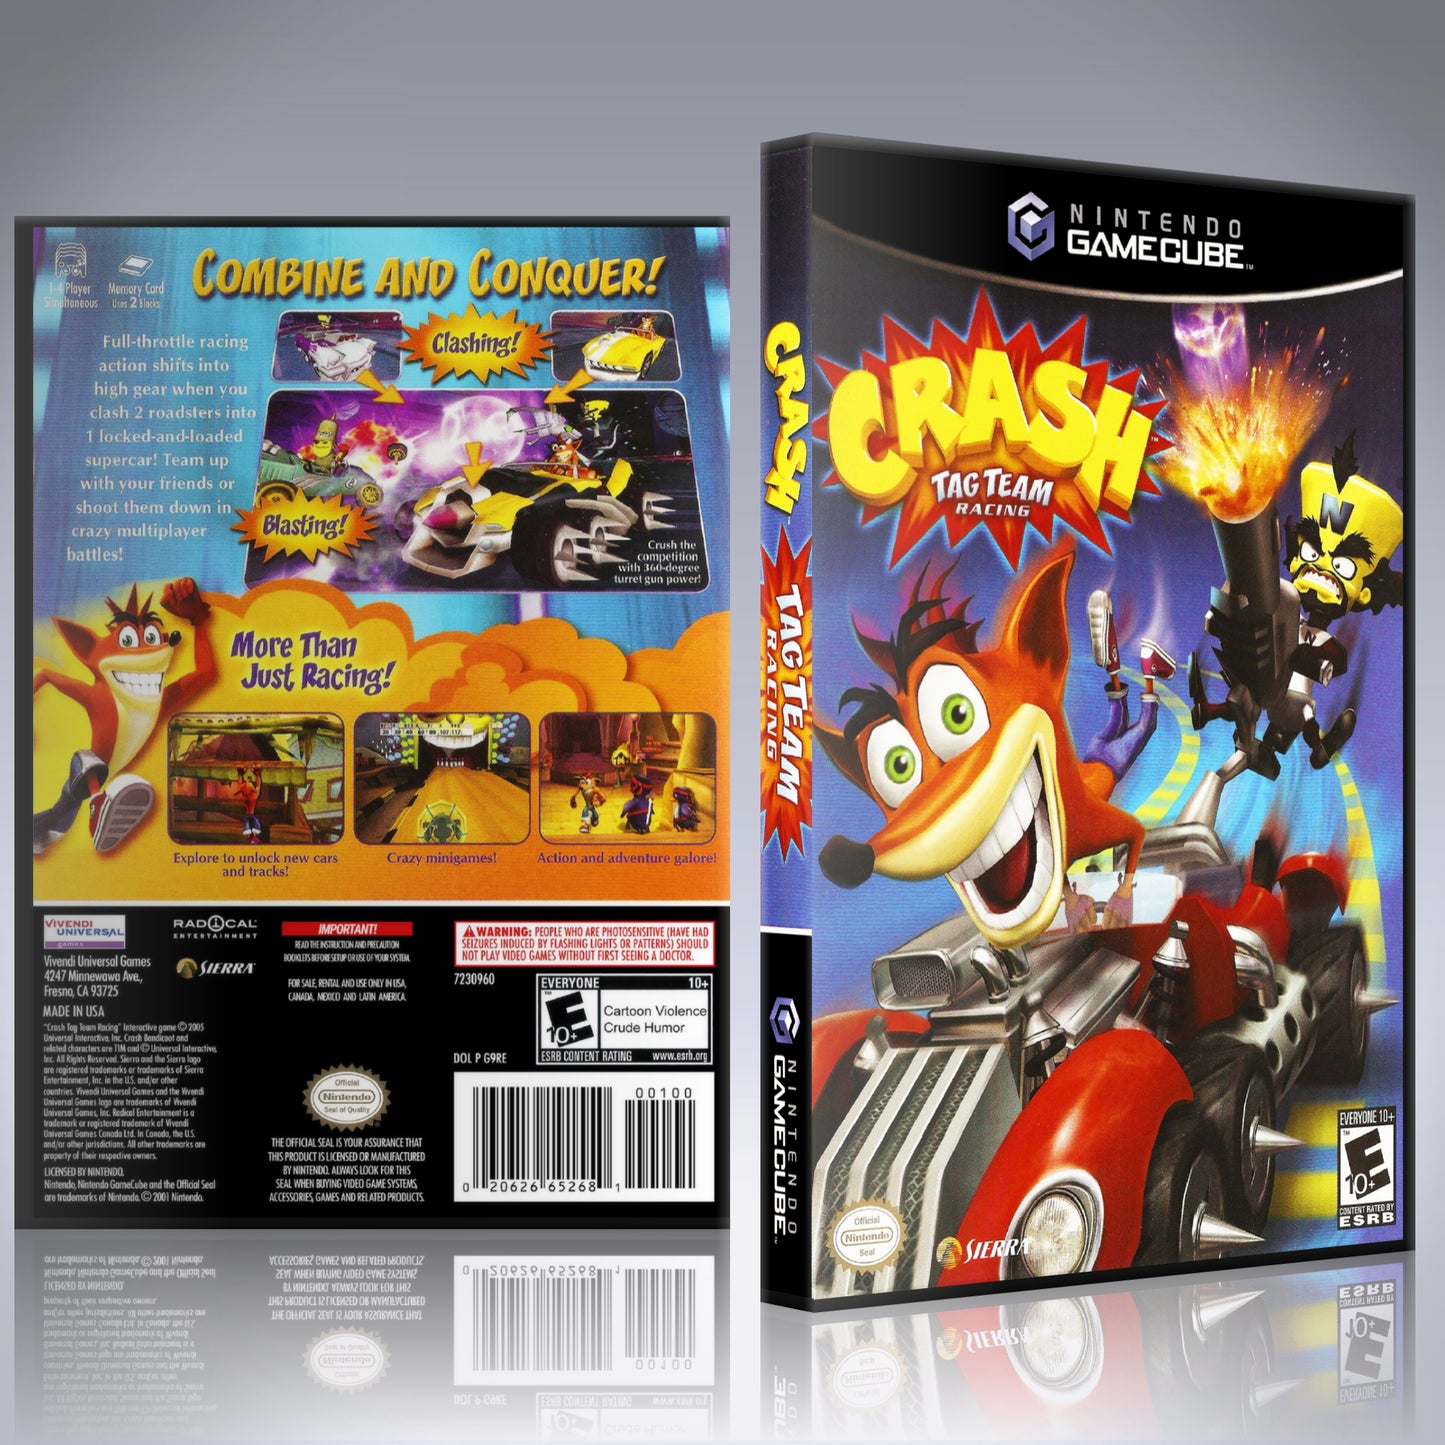 GameCube Replacement Case - NO GAME - Crash Tag Team Racing